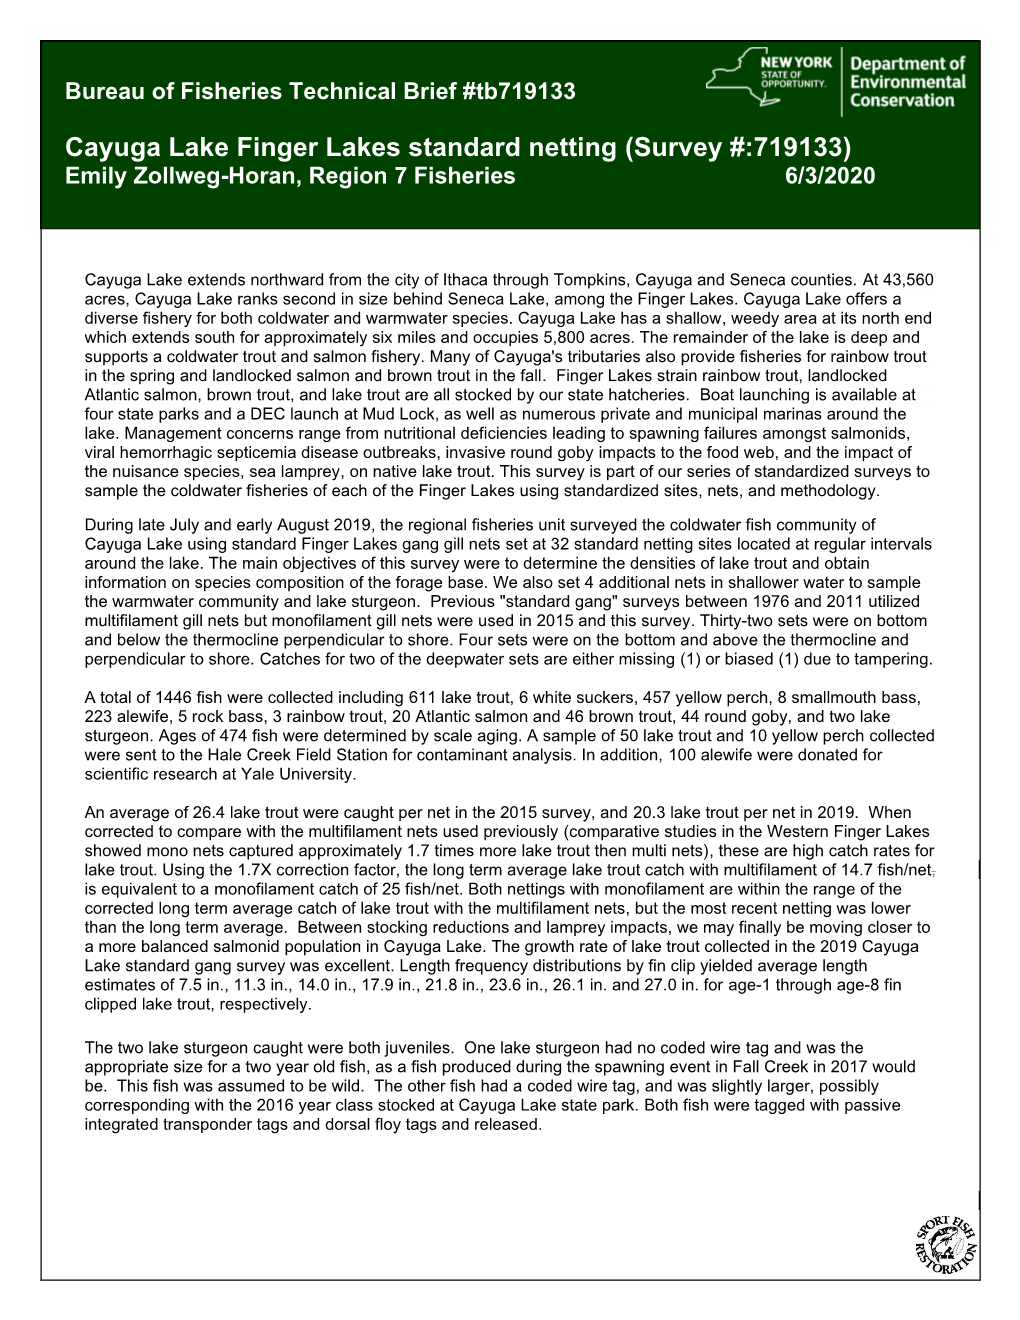 Cayuga Lake Finger Lakes Standard Netting (Survey #:719133) Emily Zollweg-Horan, Region 7 Fisheries 6/3/2020